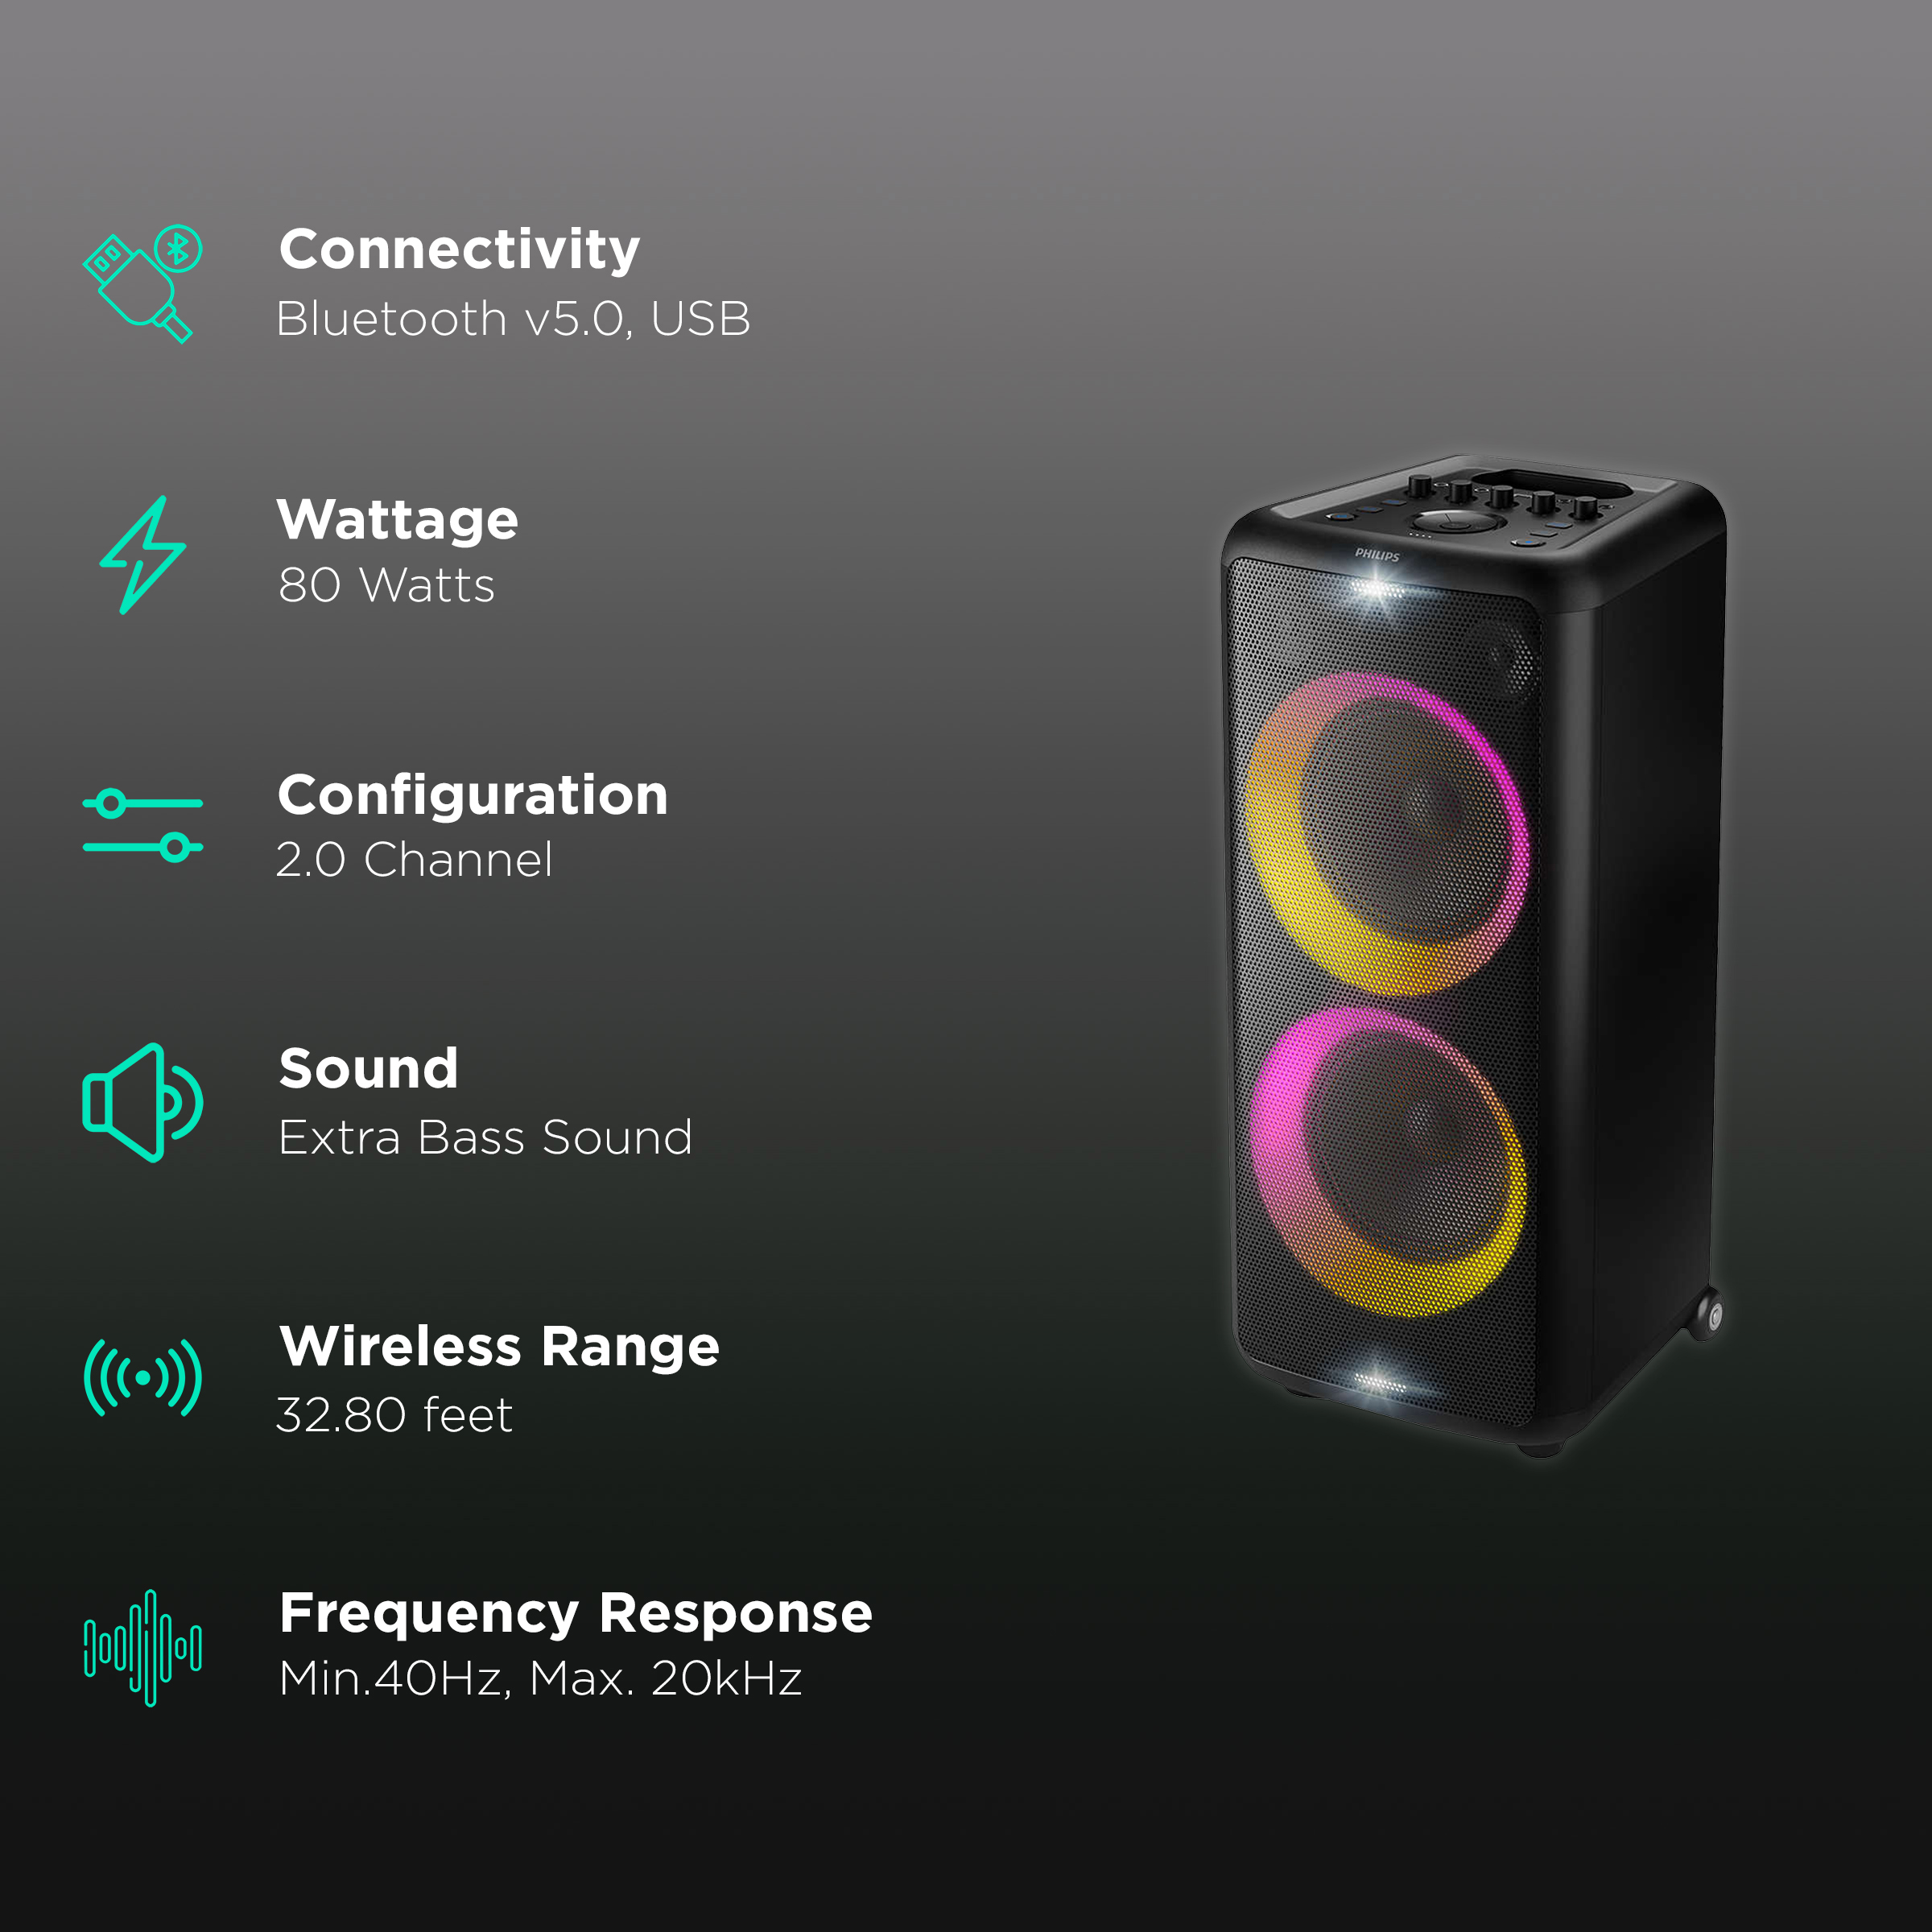 Bluetooth party speaker TAX5206/37